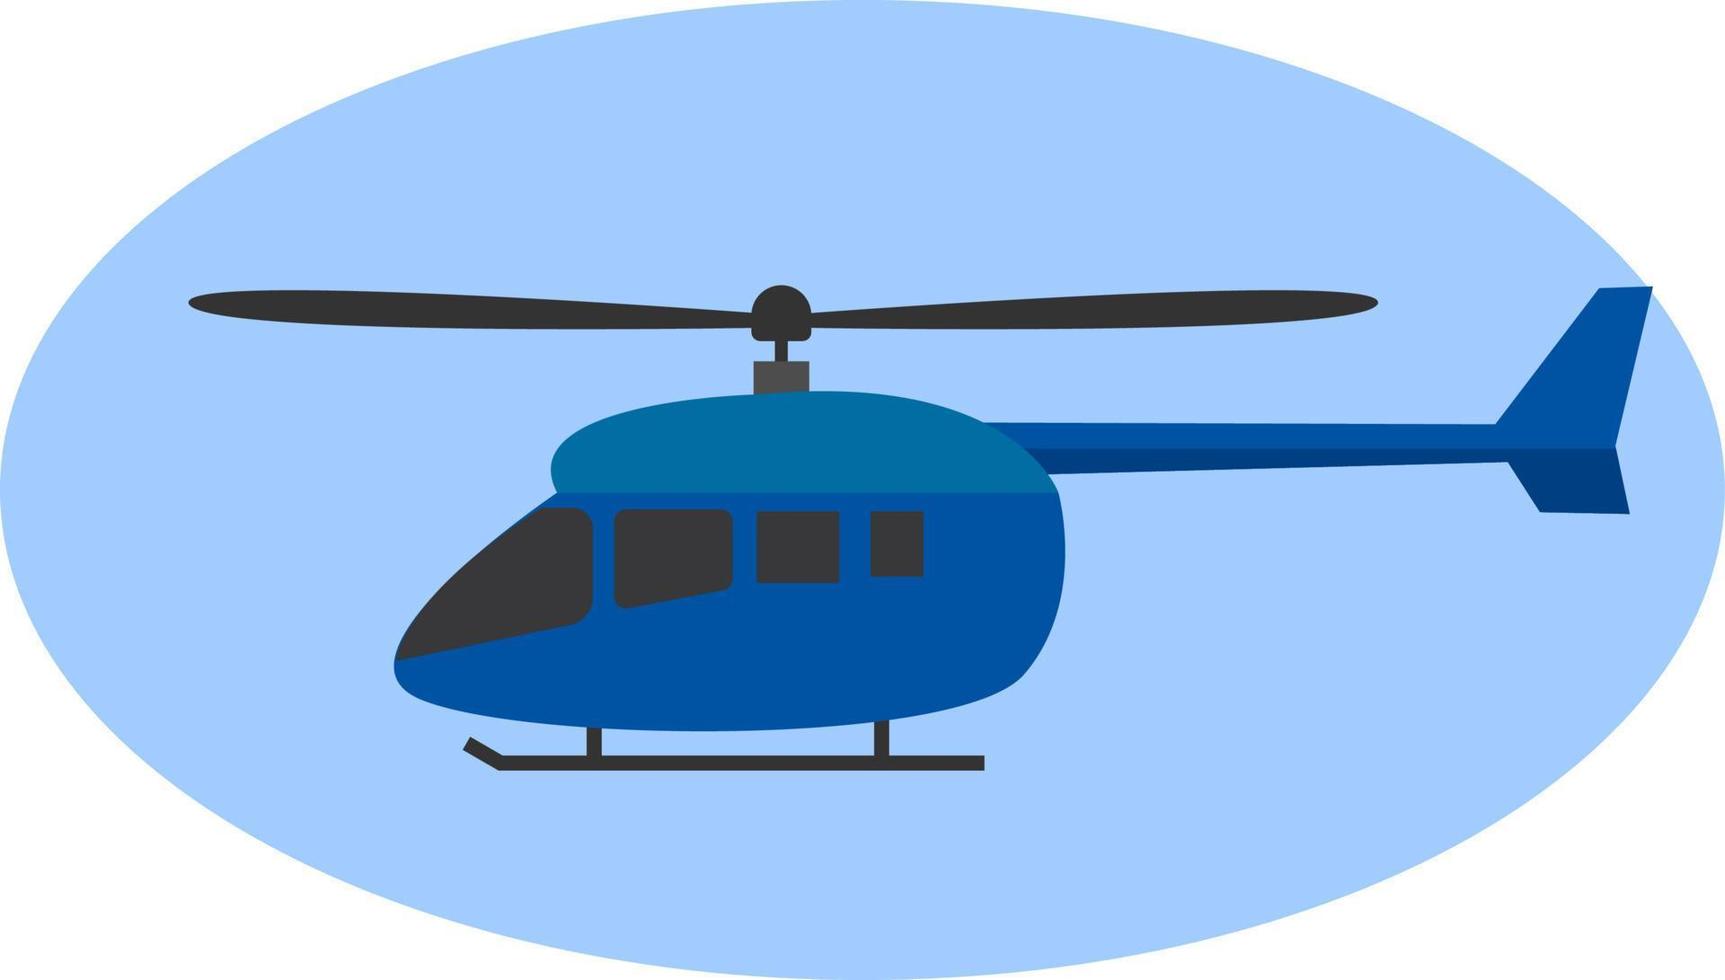 Blue helicopter, illustration, vector on white background.